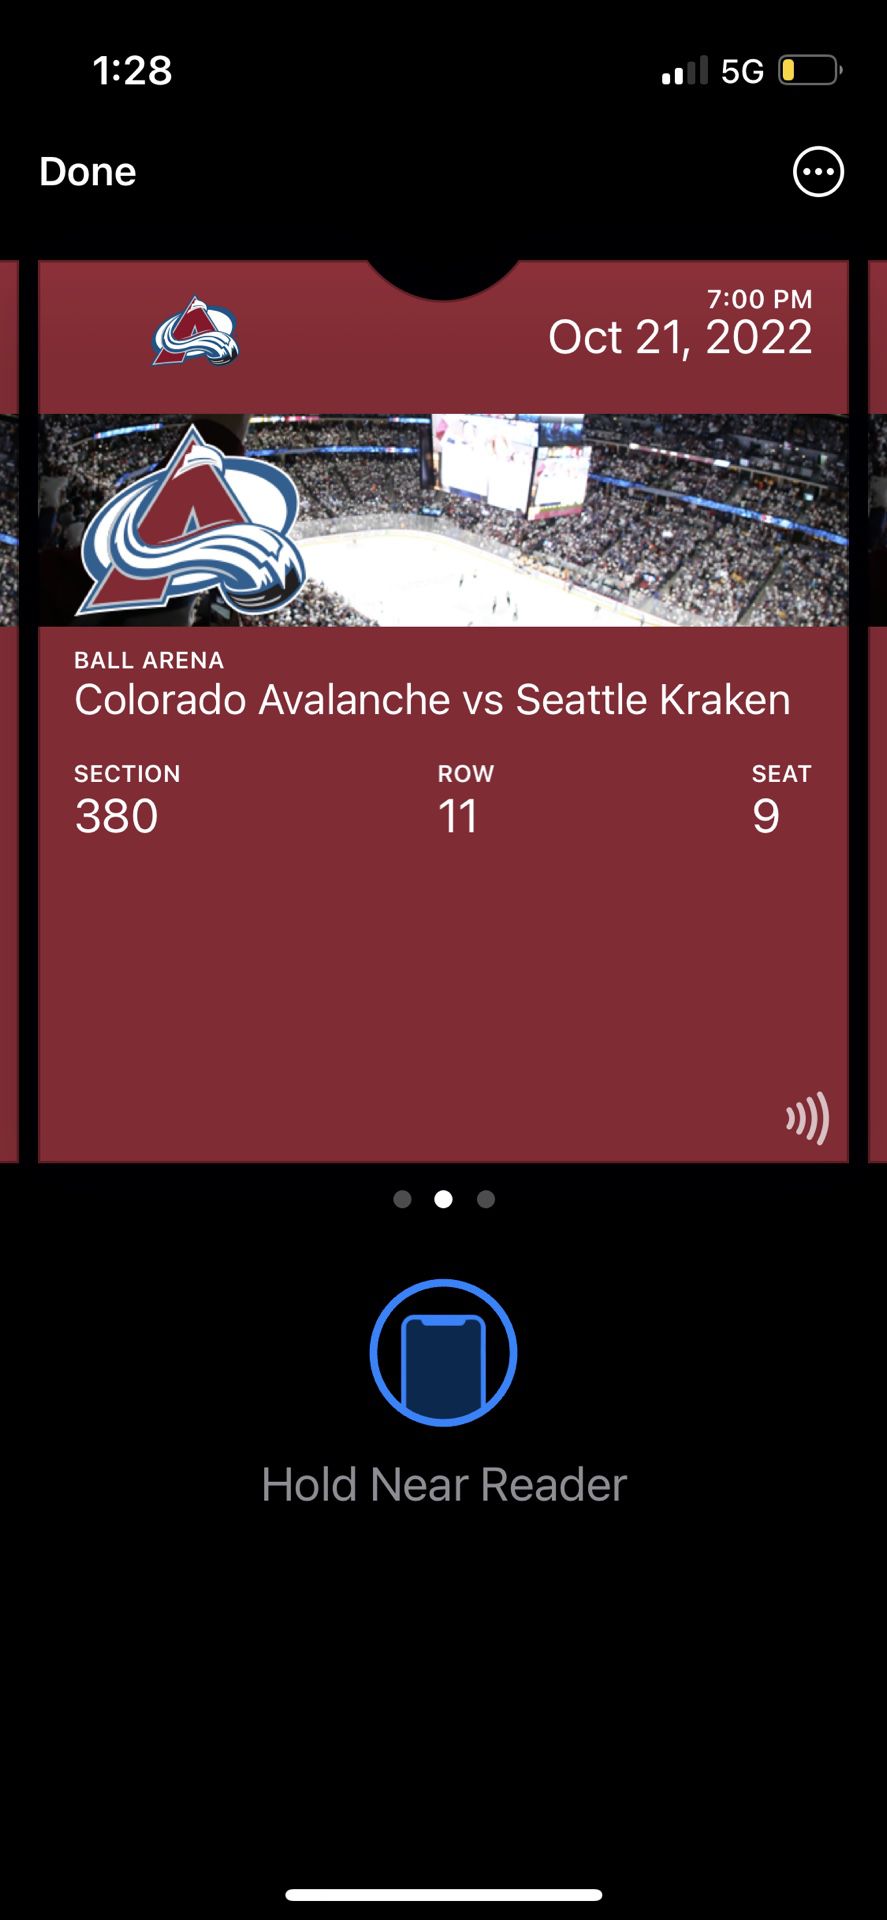 Colorado Avalanche vs Seattle Kraken 10/21 x 3 Tickets